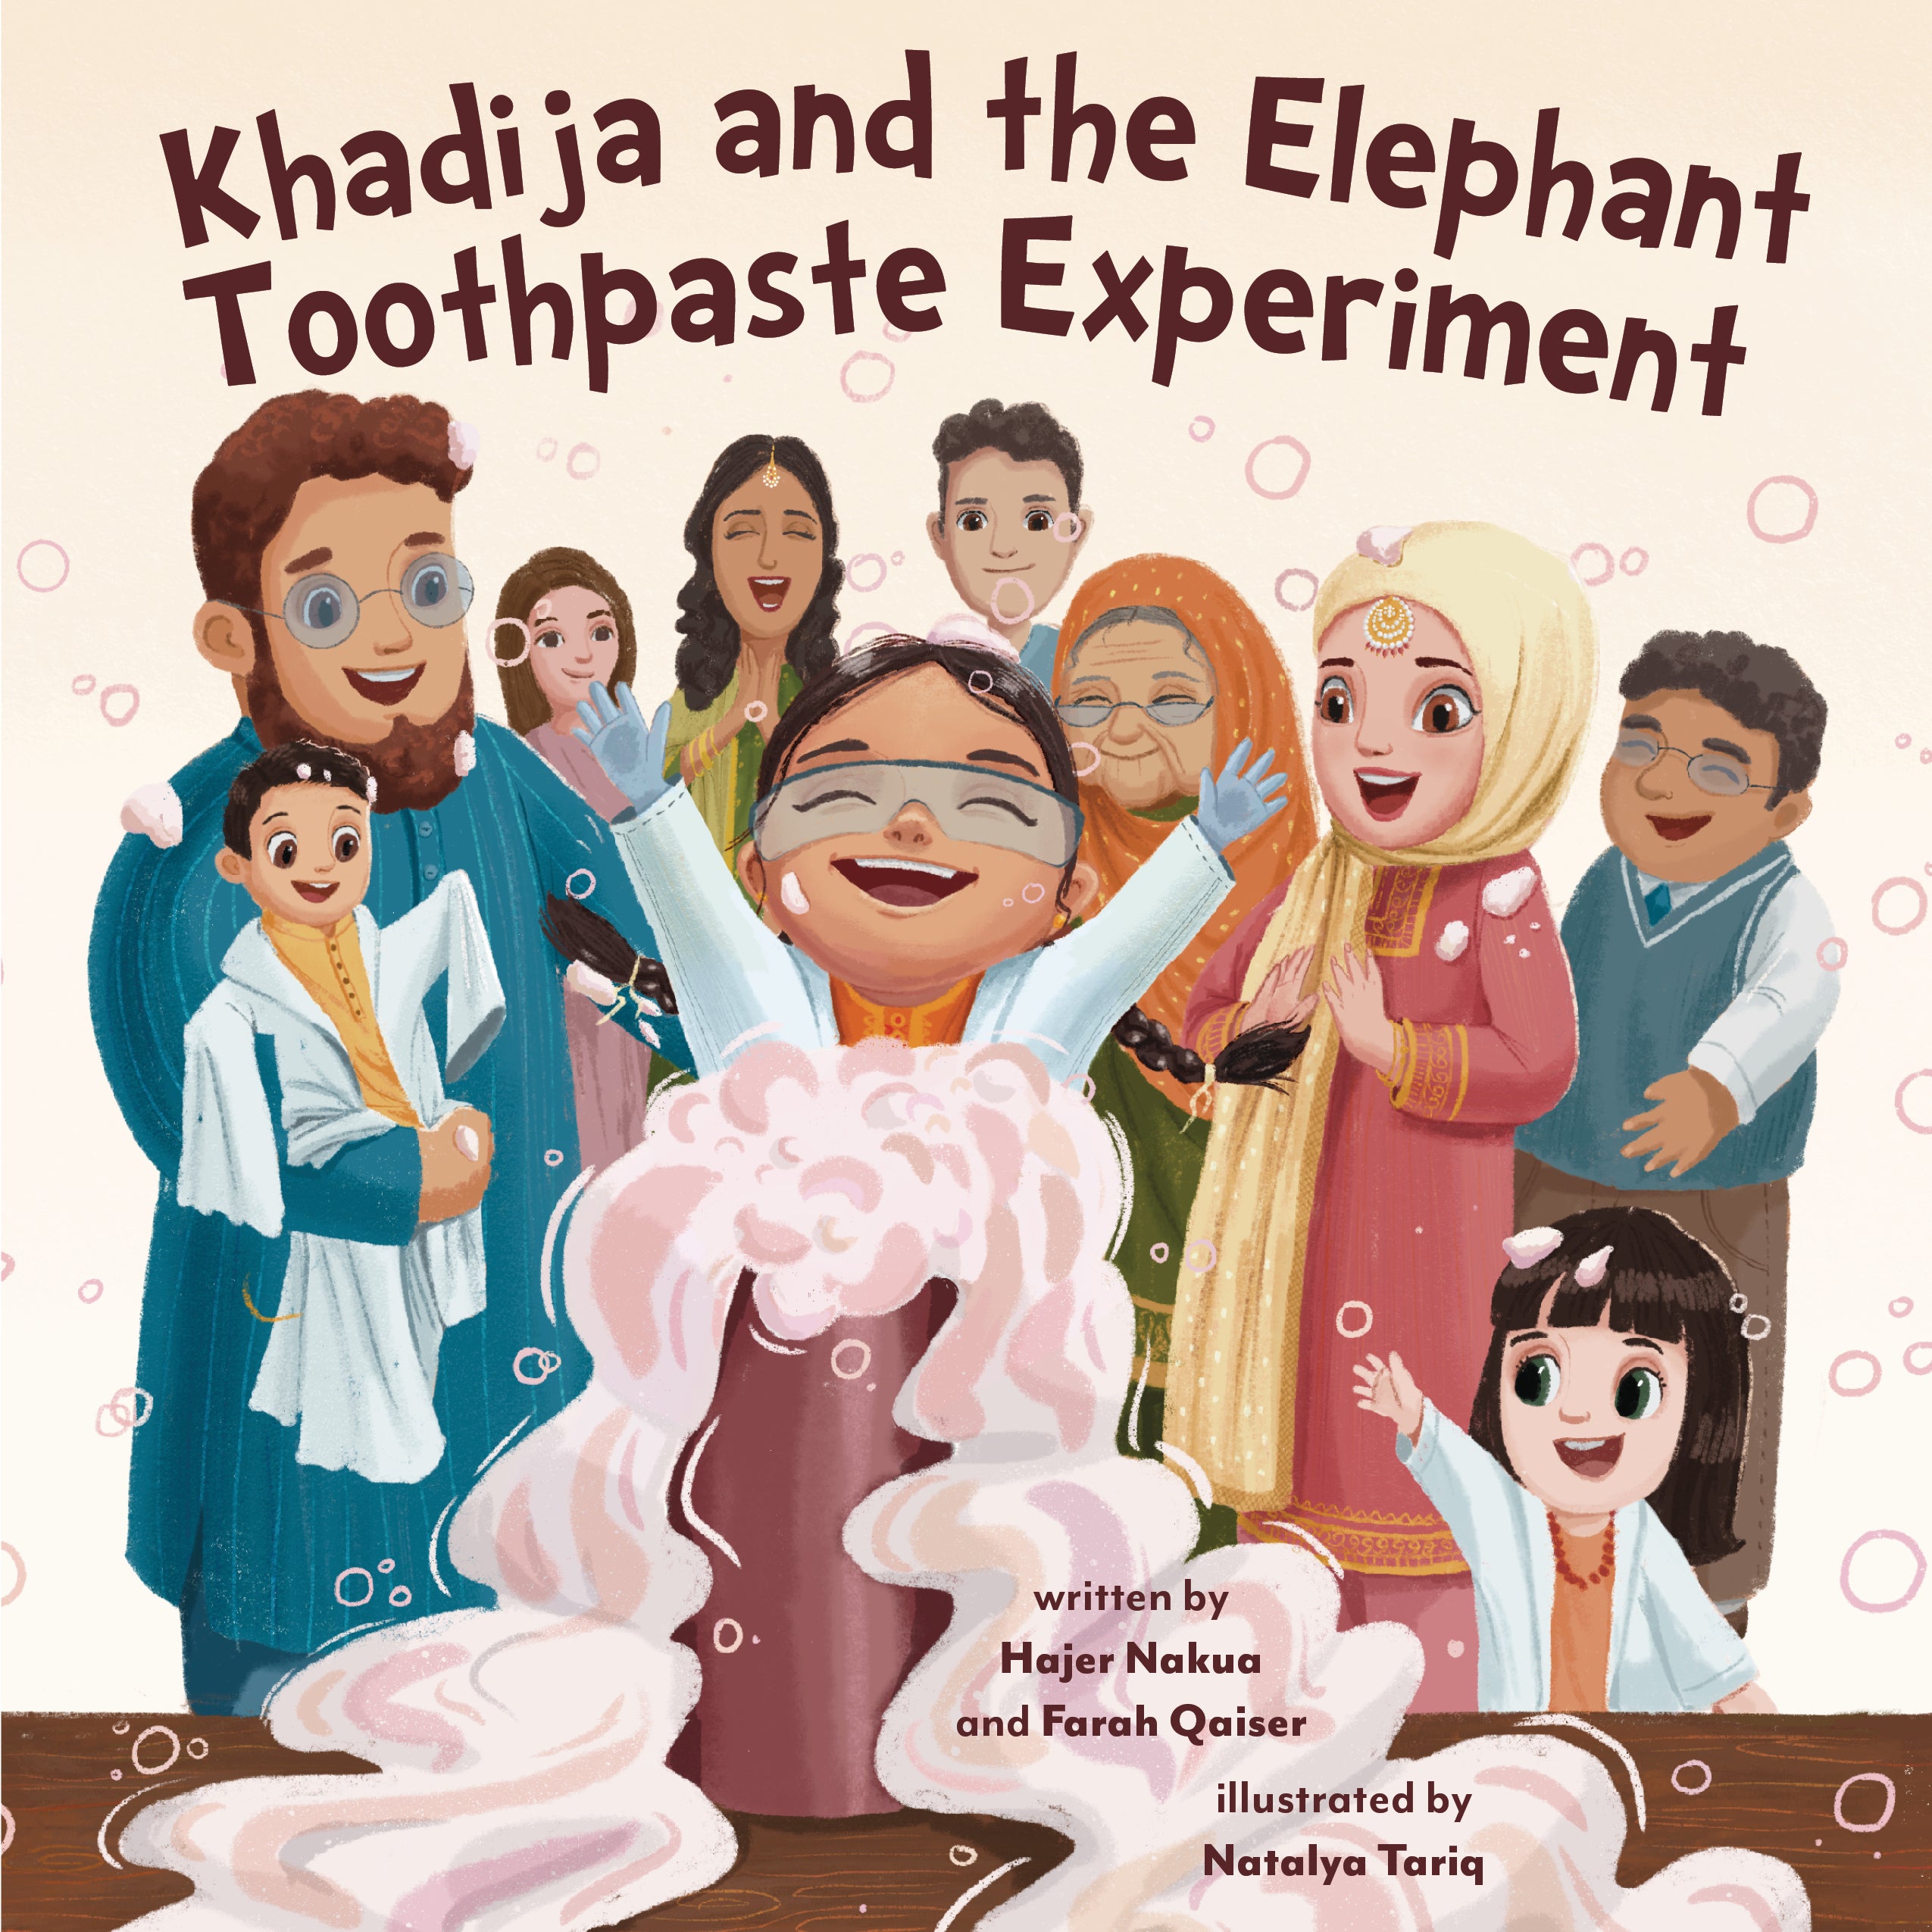 Khadija and the Elephant Toothpaste Experiment-ebook